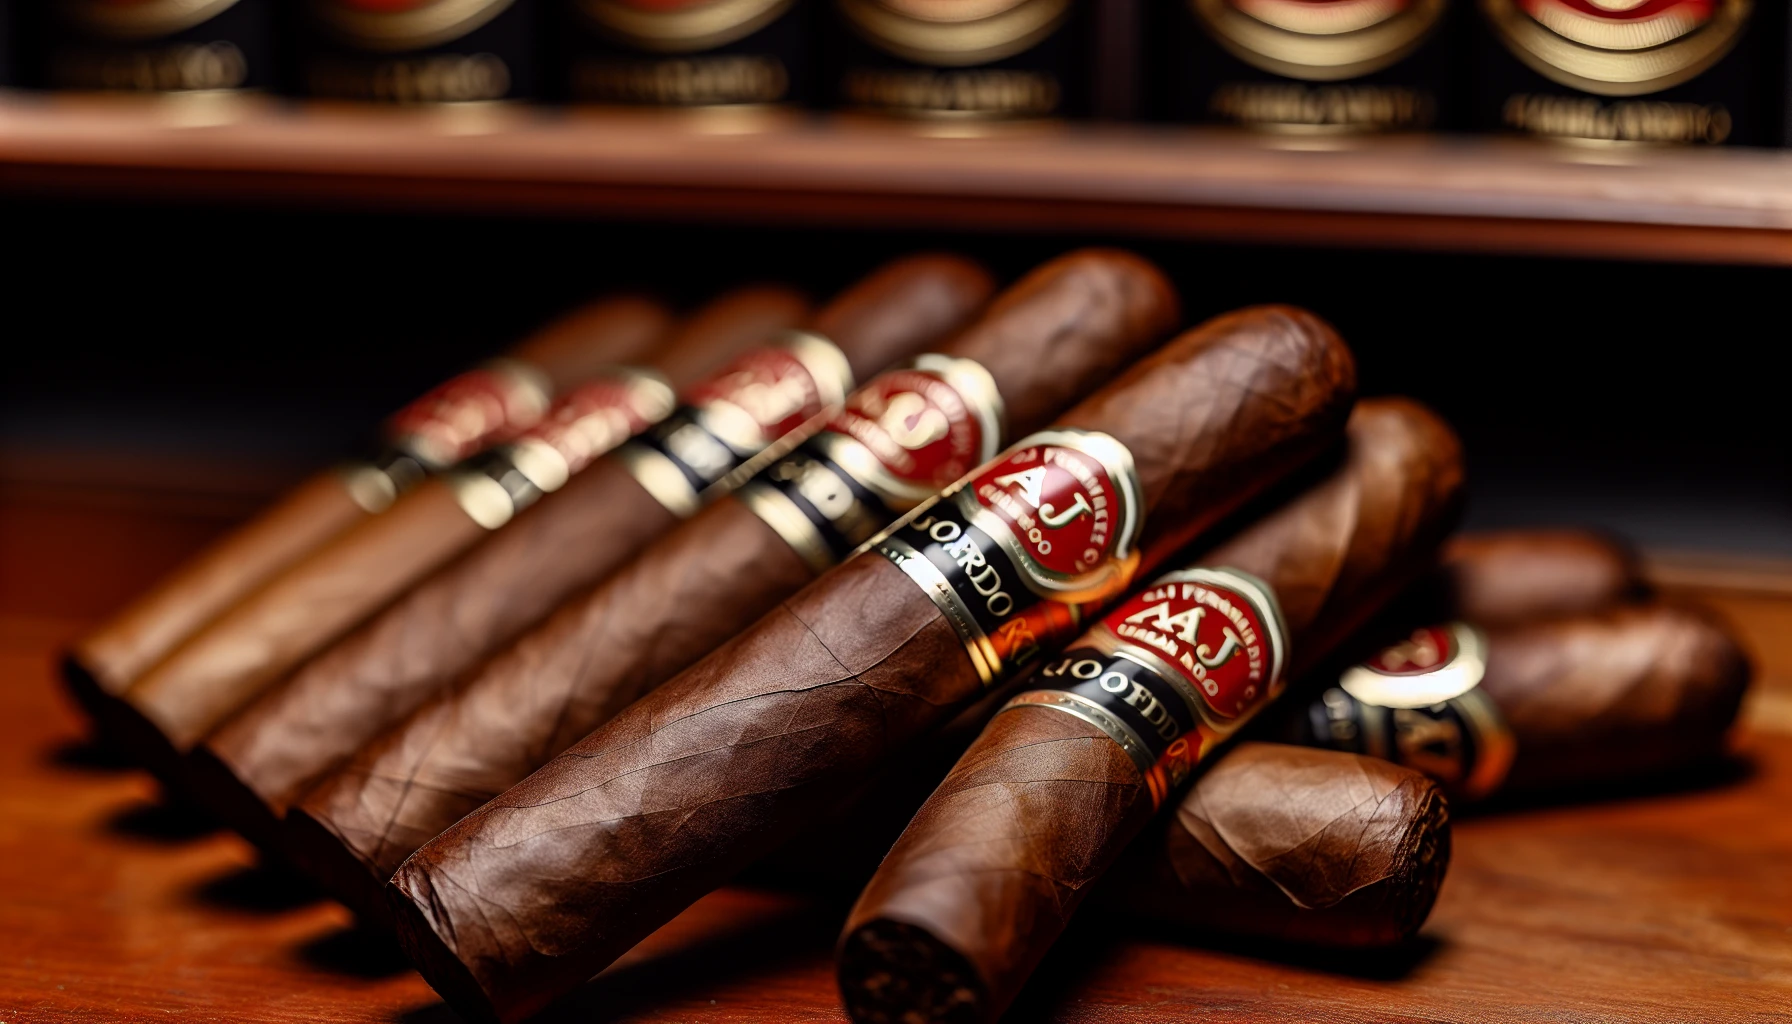 An assortment of AJ Fernandez Días de Gloria Gordo cigars with rich, dark wrappers